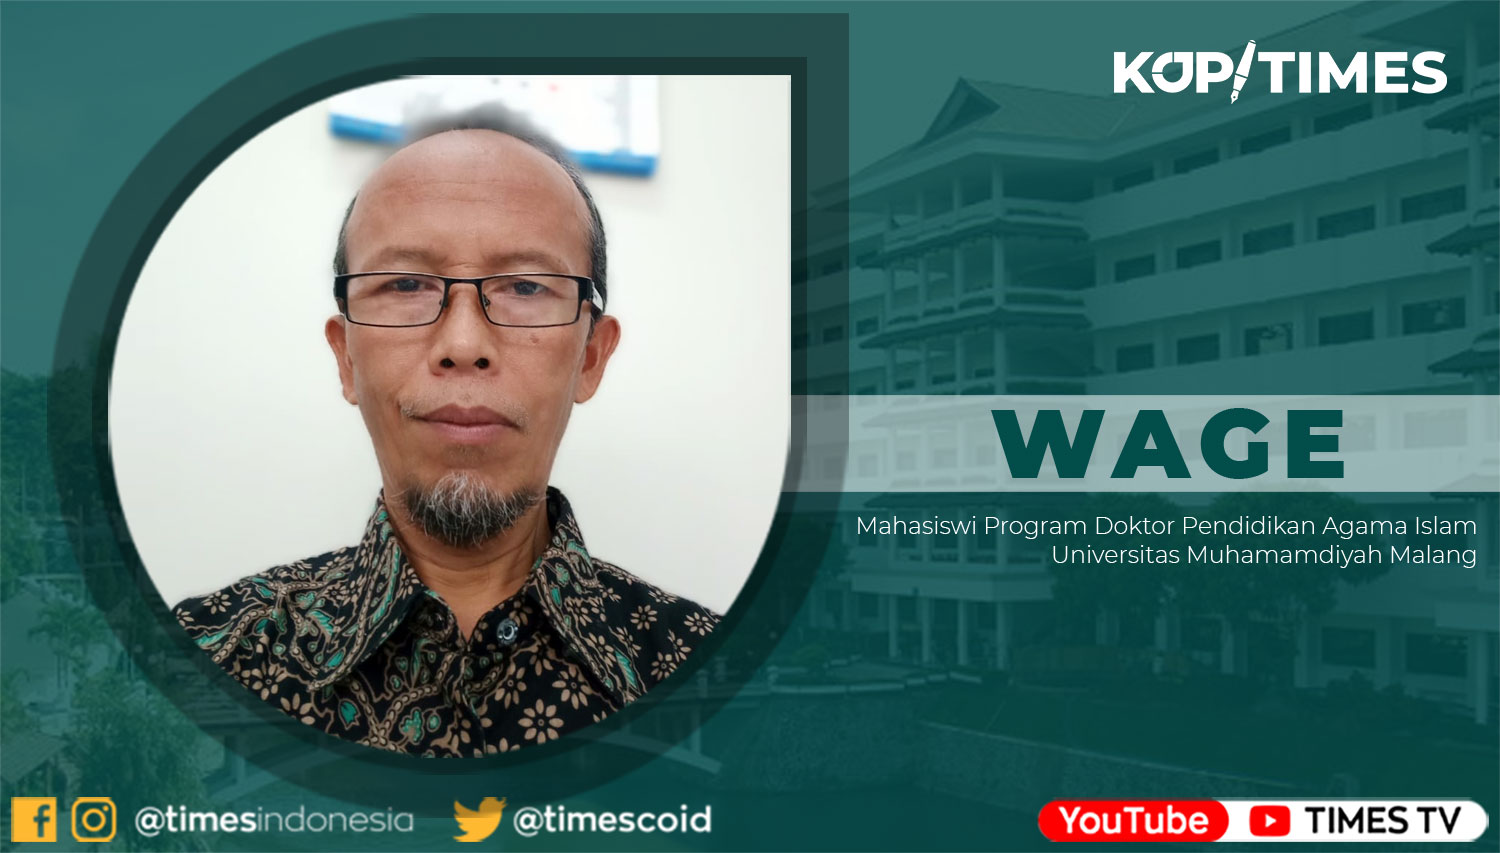 Wage, Mahasiswa Program Doktor Pendidikan Agama Islam Universitas Muhamamdiyah Malang.